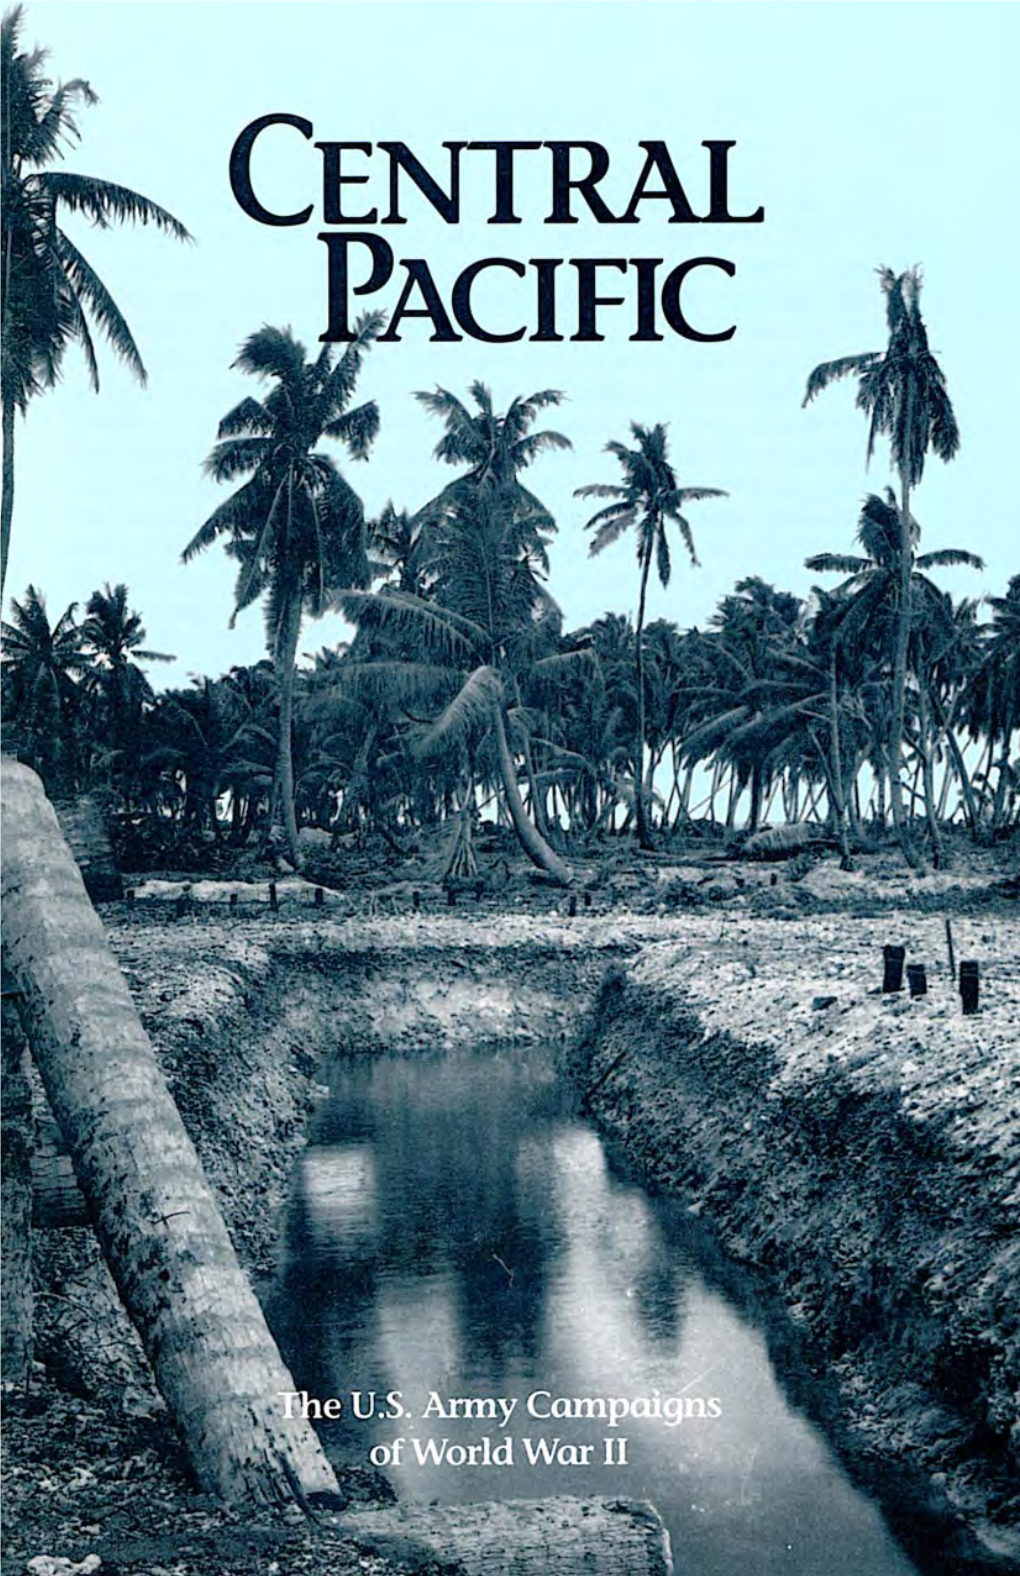 Central Pacific 7 December 1941-6 December 1943